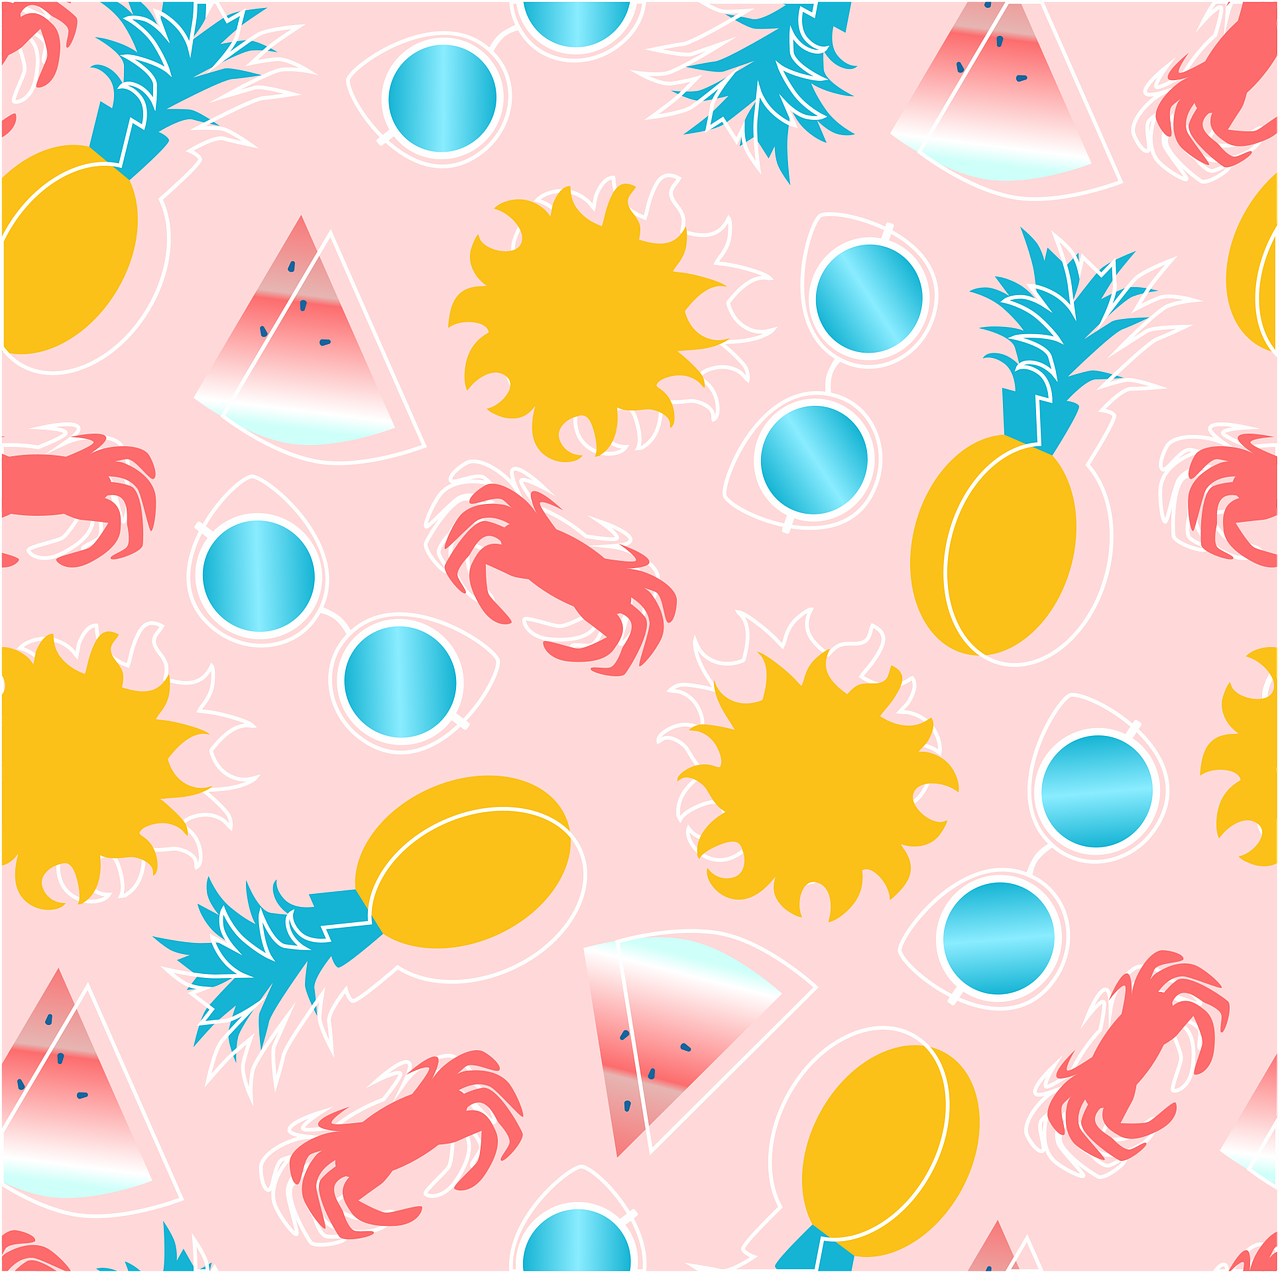  Spätsommer Hintergrundbild 1280x1273. Hintergrund Muster Sommer Vektorgrafik auf Pixabay